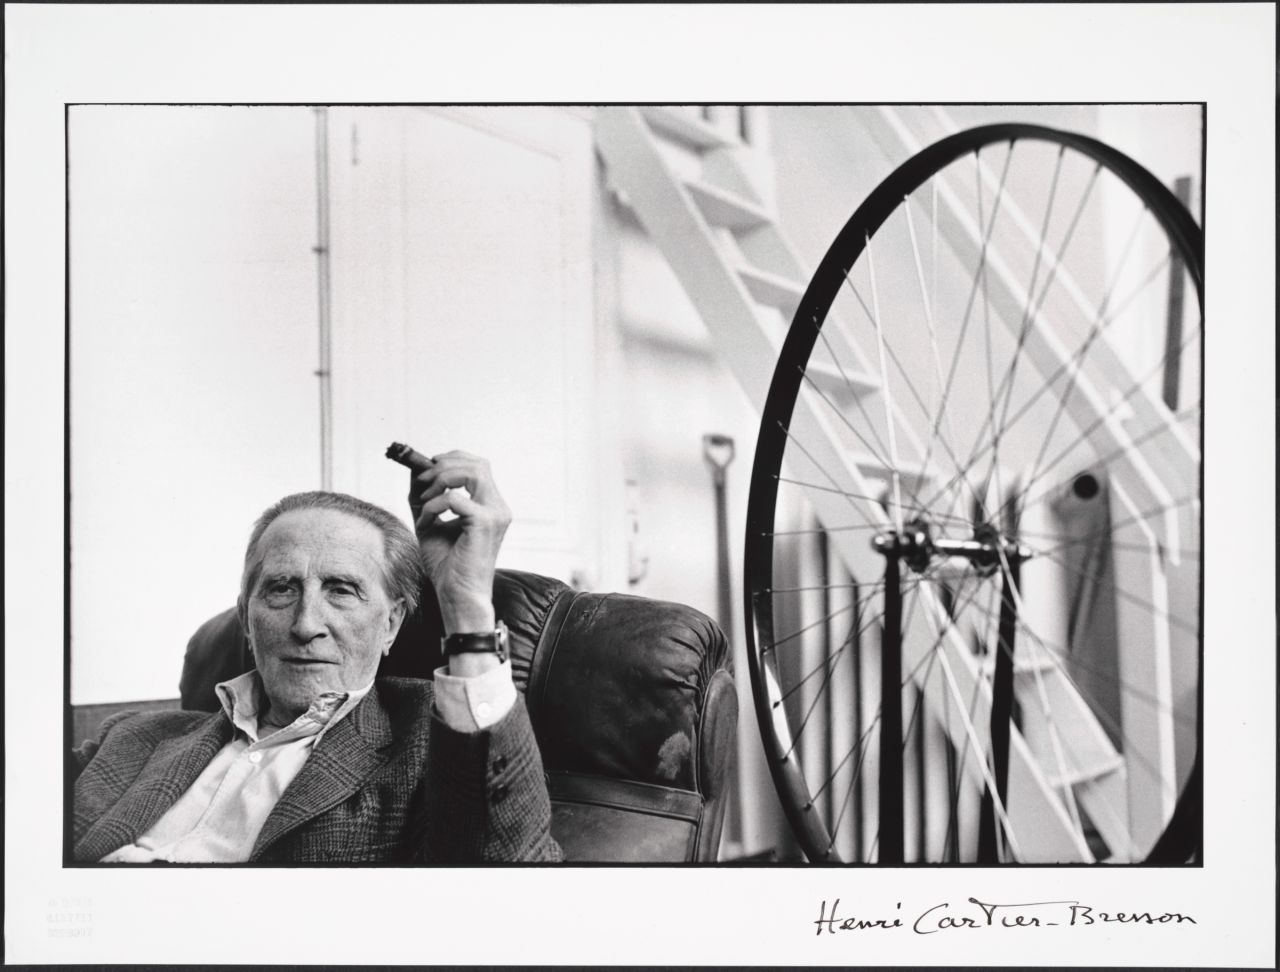 Marcel Duchamp in 1968 by Henri Cartier-Bresson